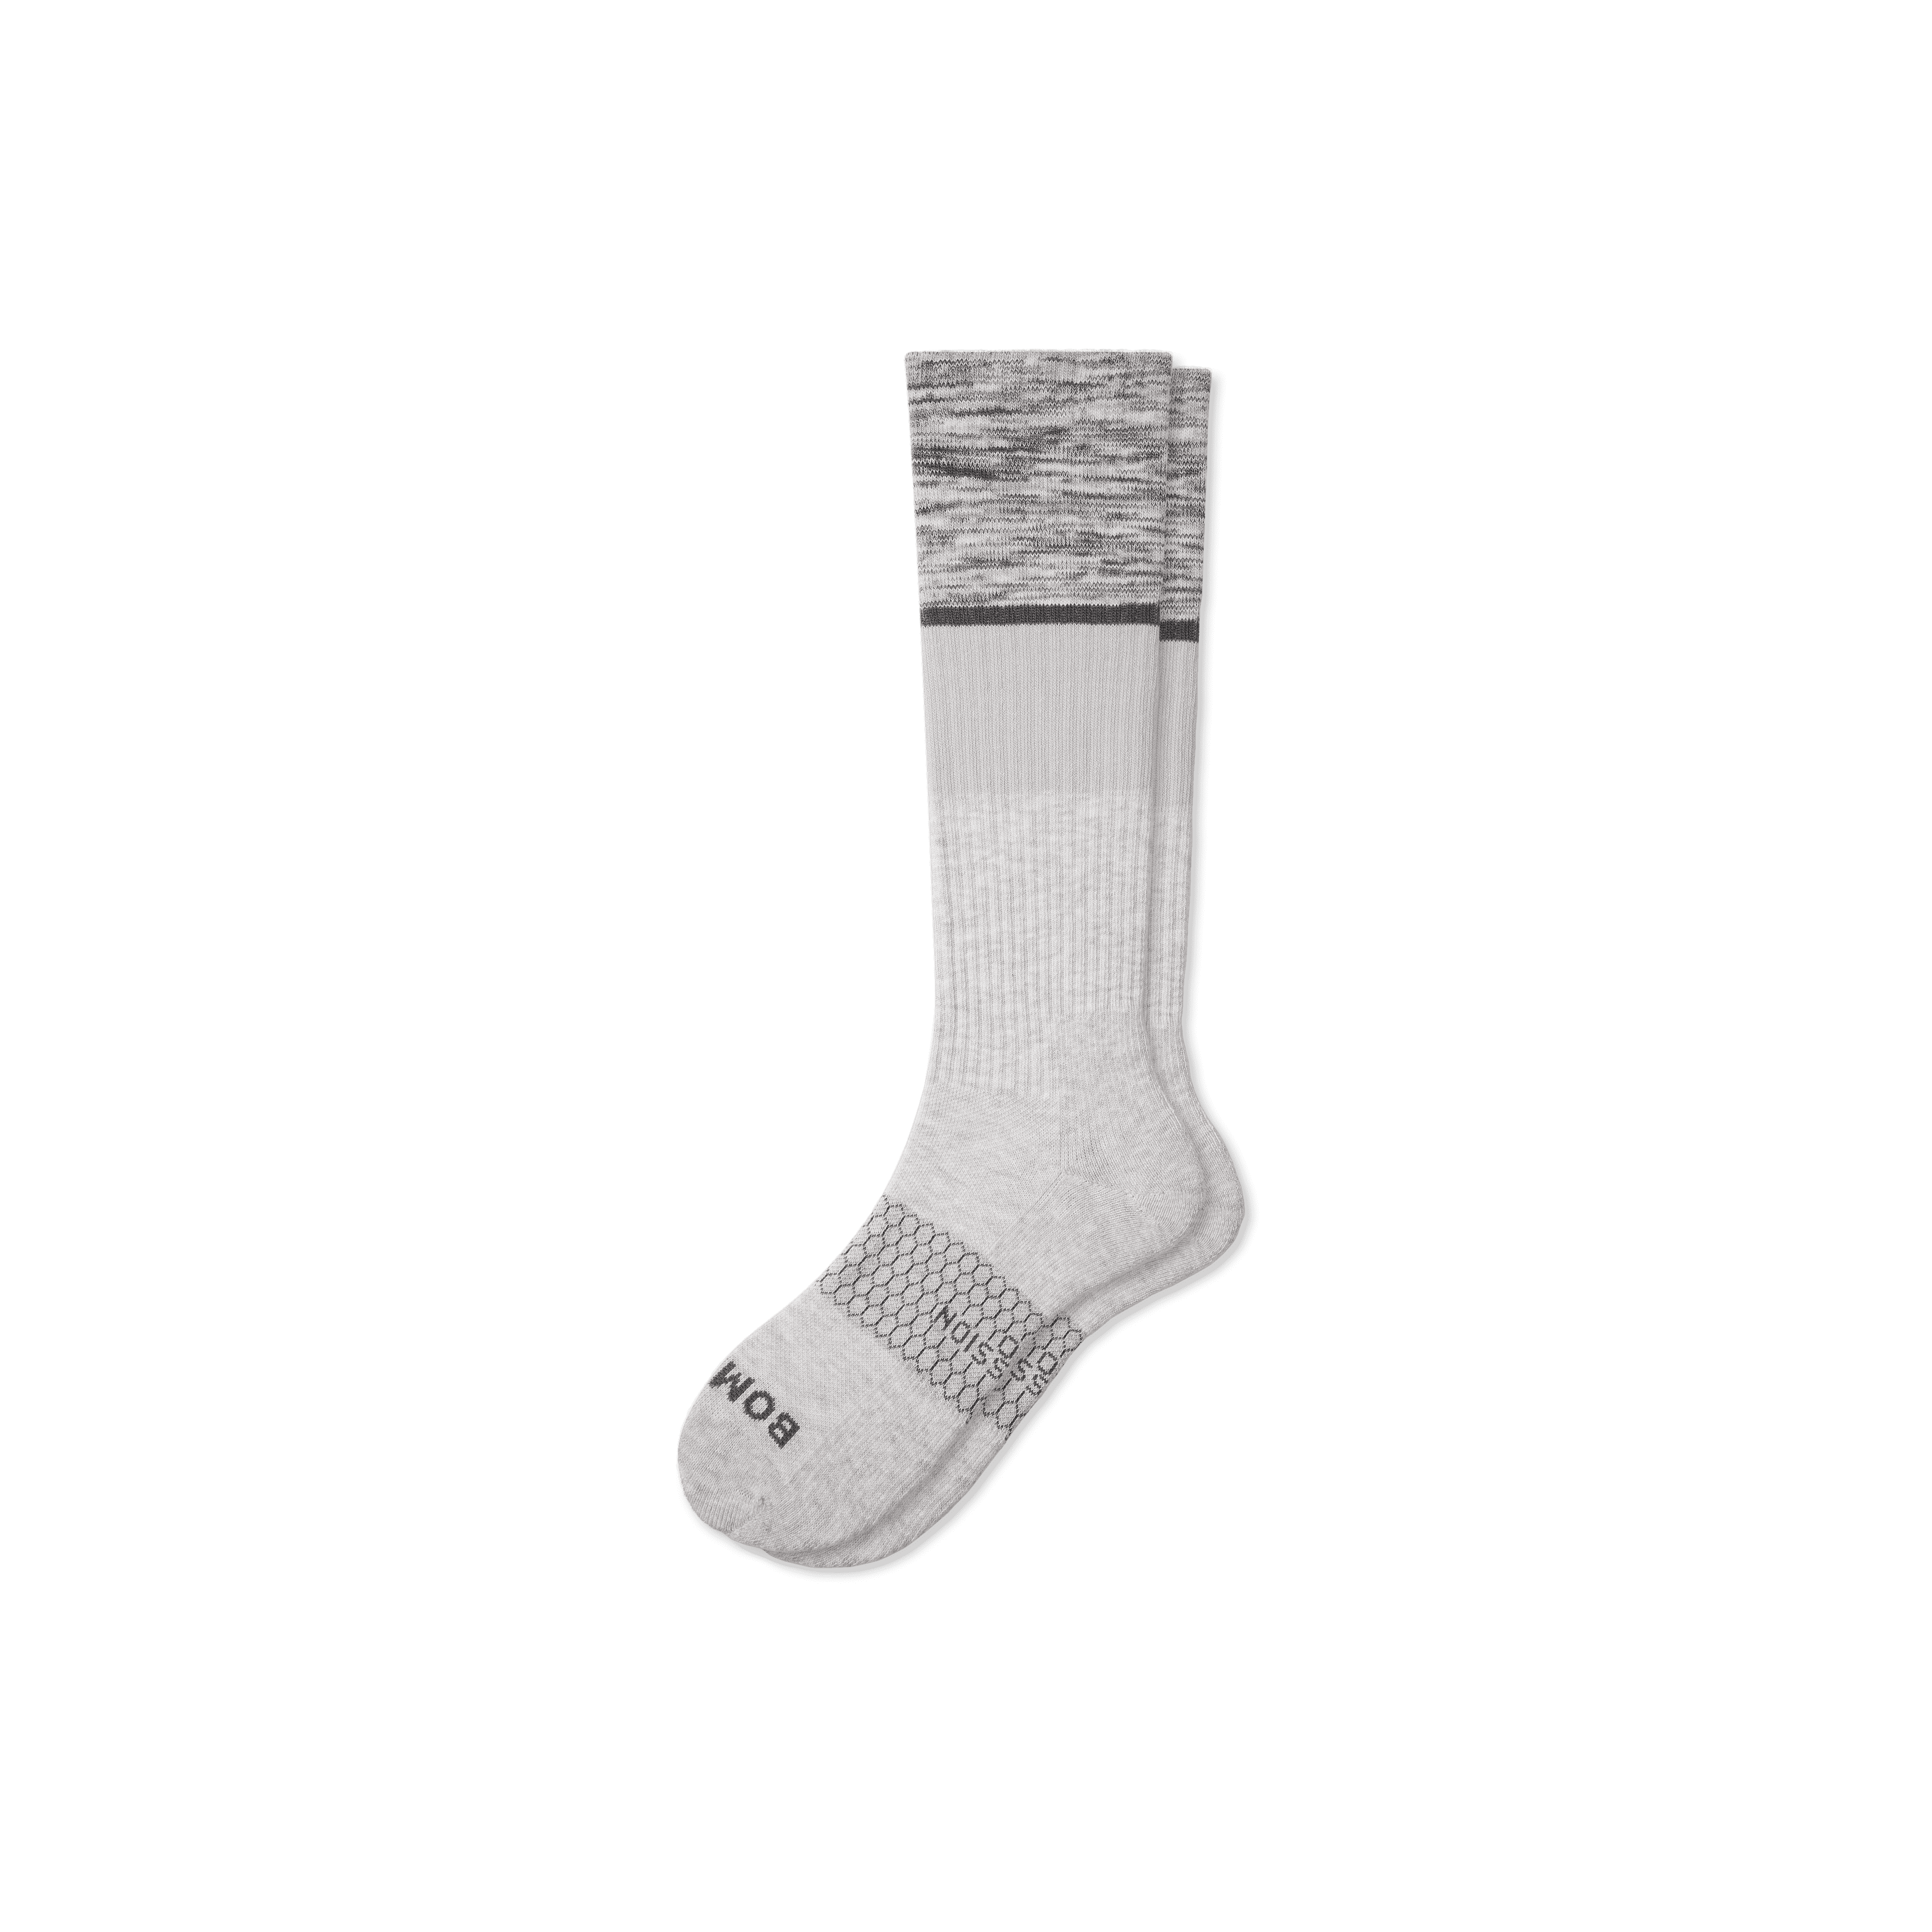 Bombas Everyday Compression Socks (15-20mmhg) In Light Grey